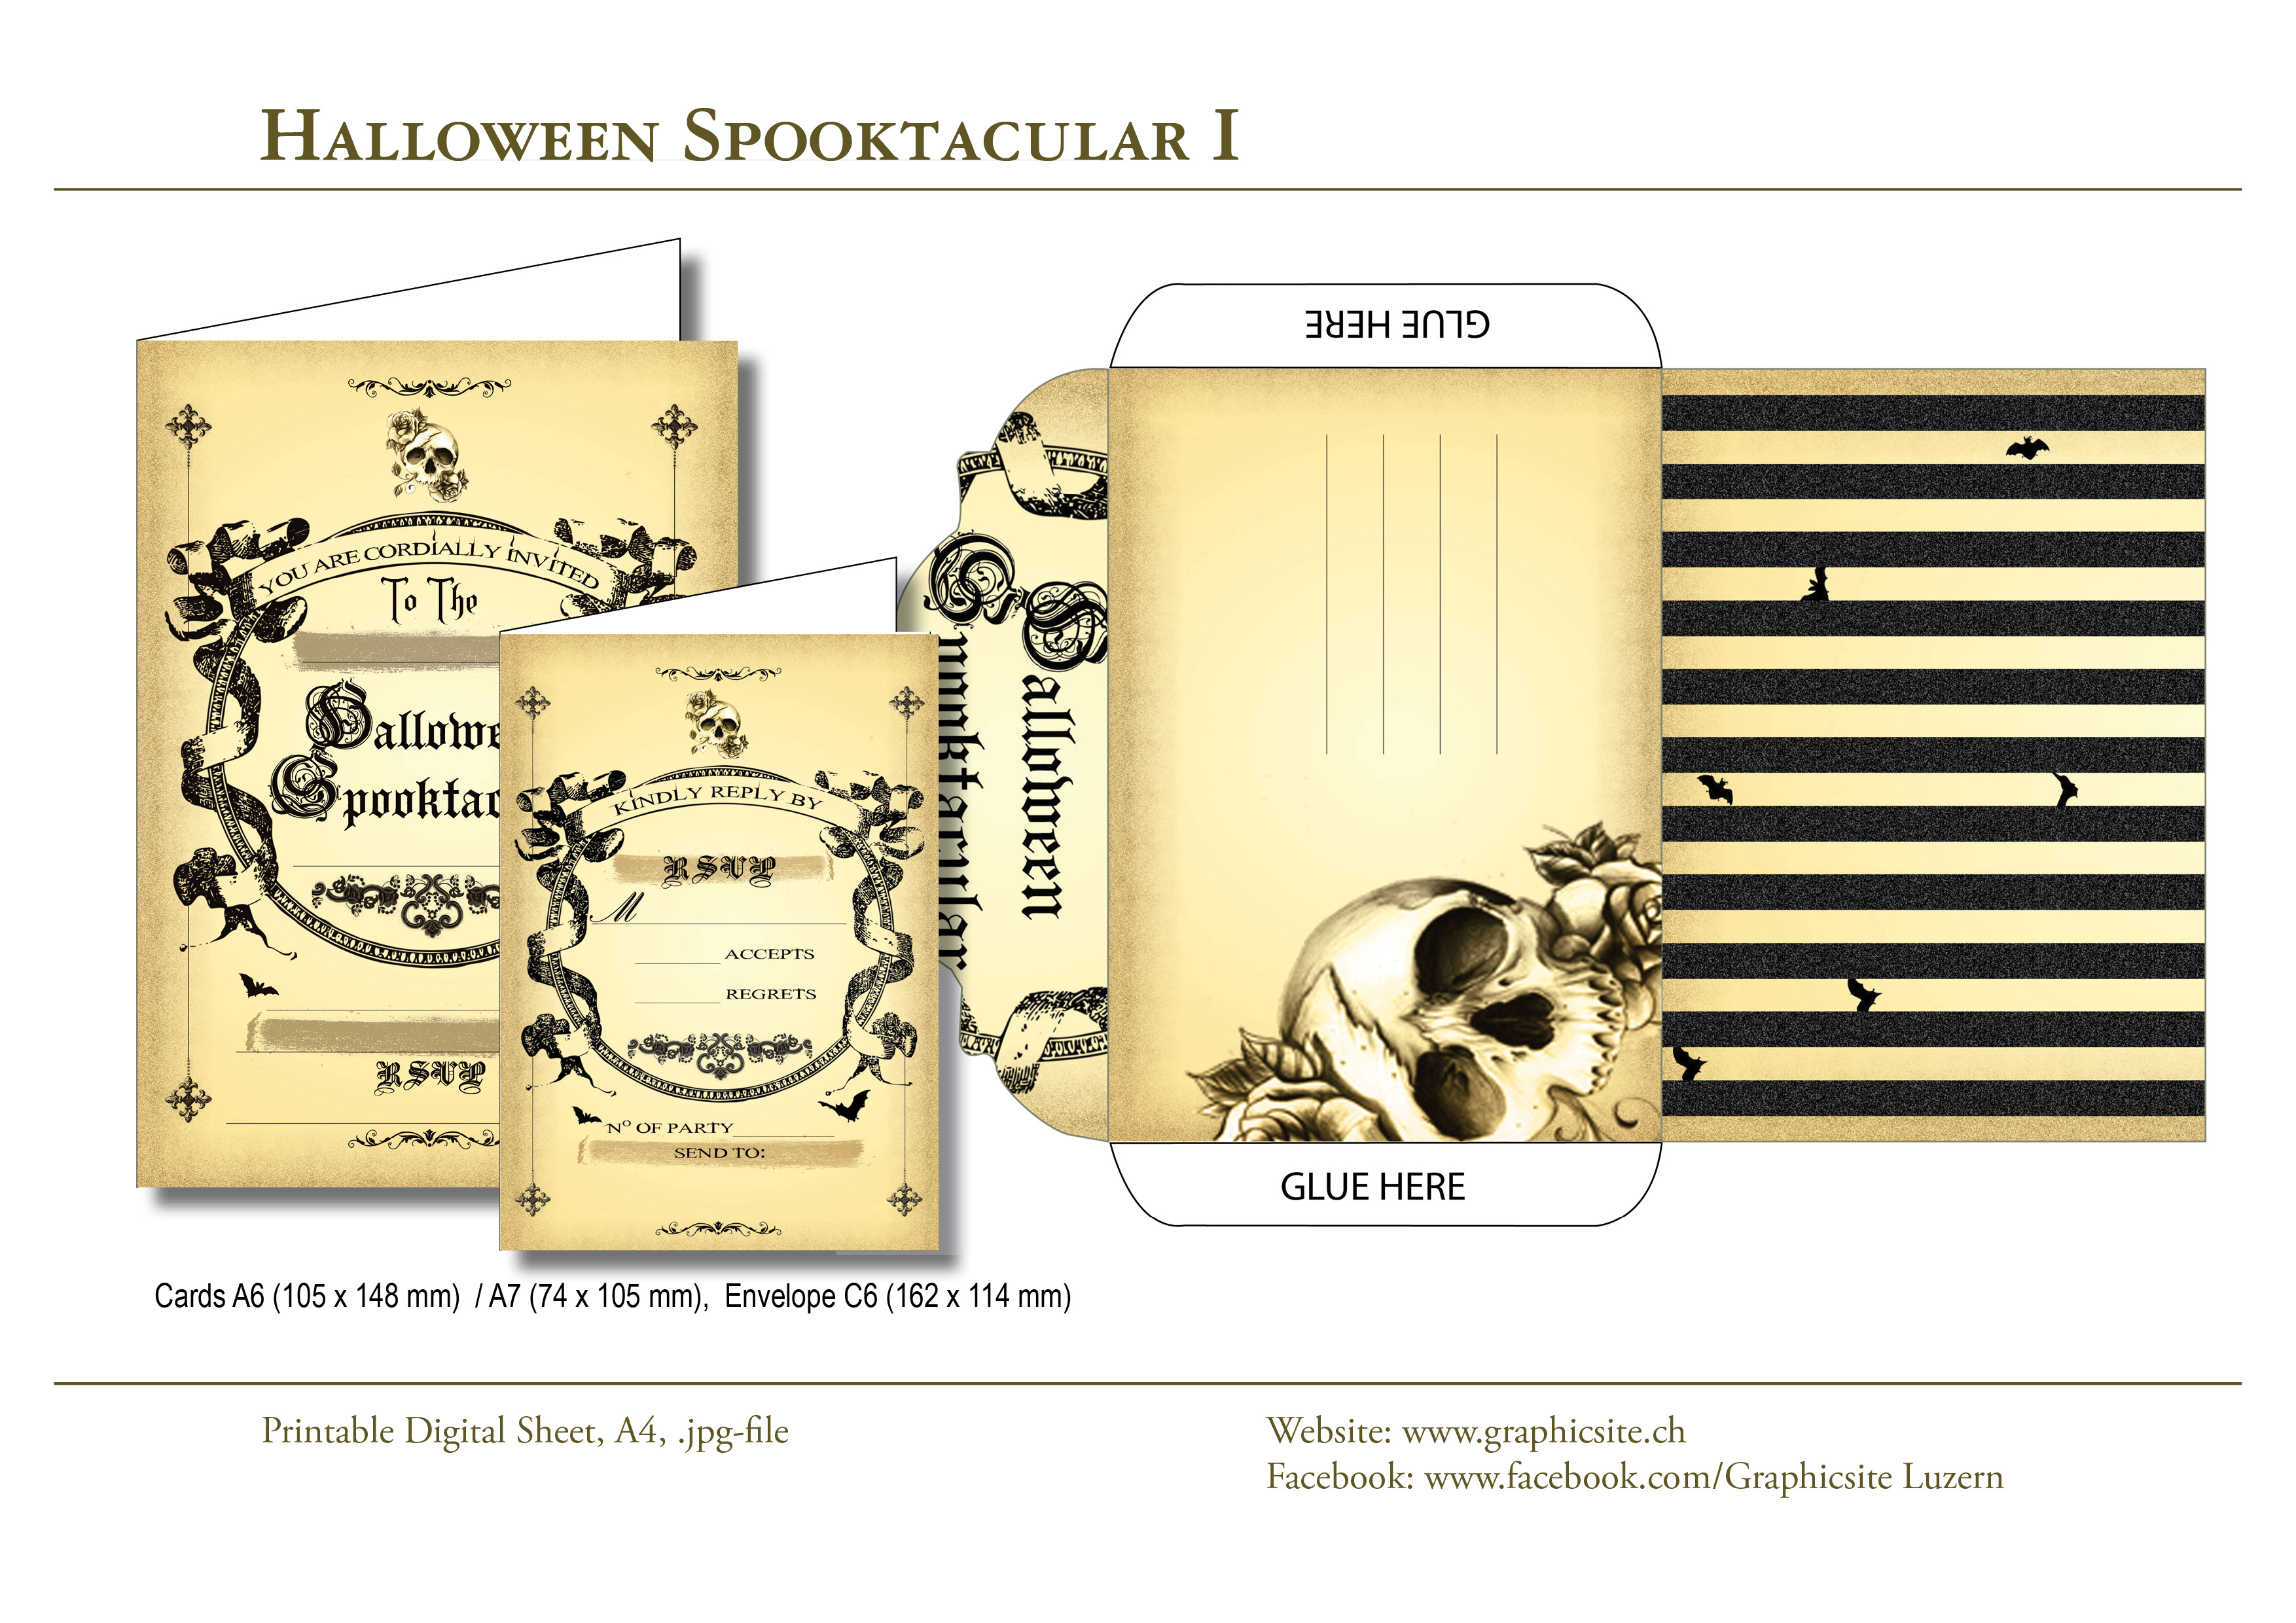 Karten selber drucken - Halloween Spooktacular - DIN A-Formate